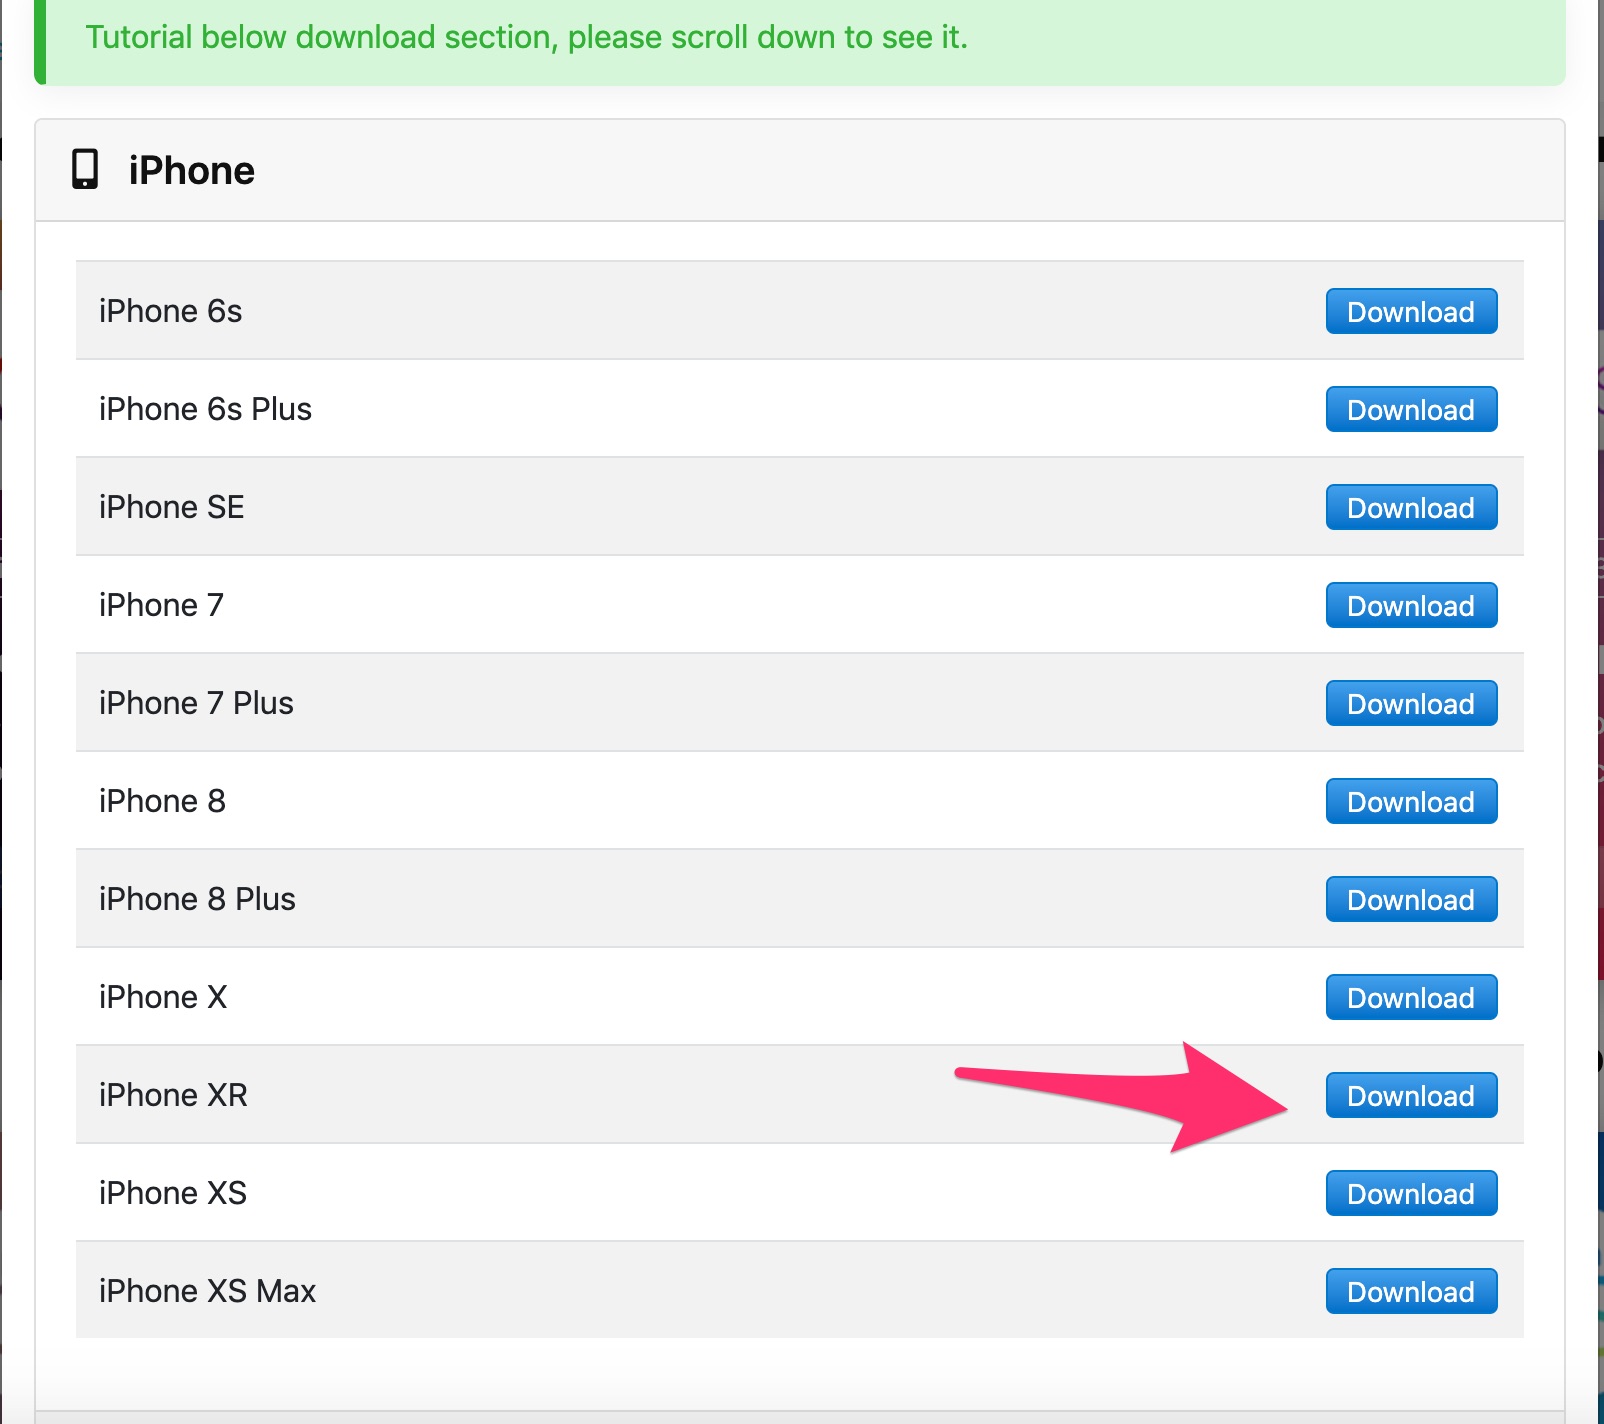 Download beta Profiles free - iOS 13 beta profile free download link